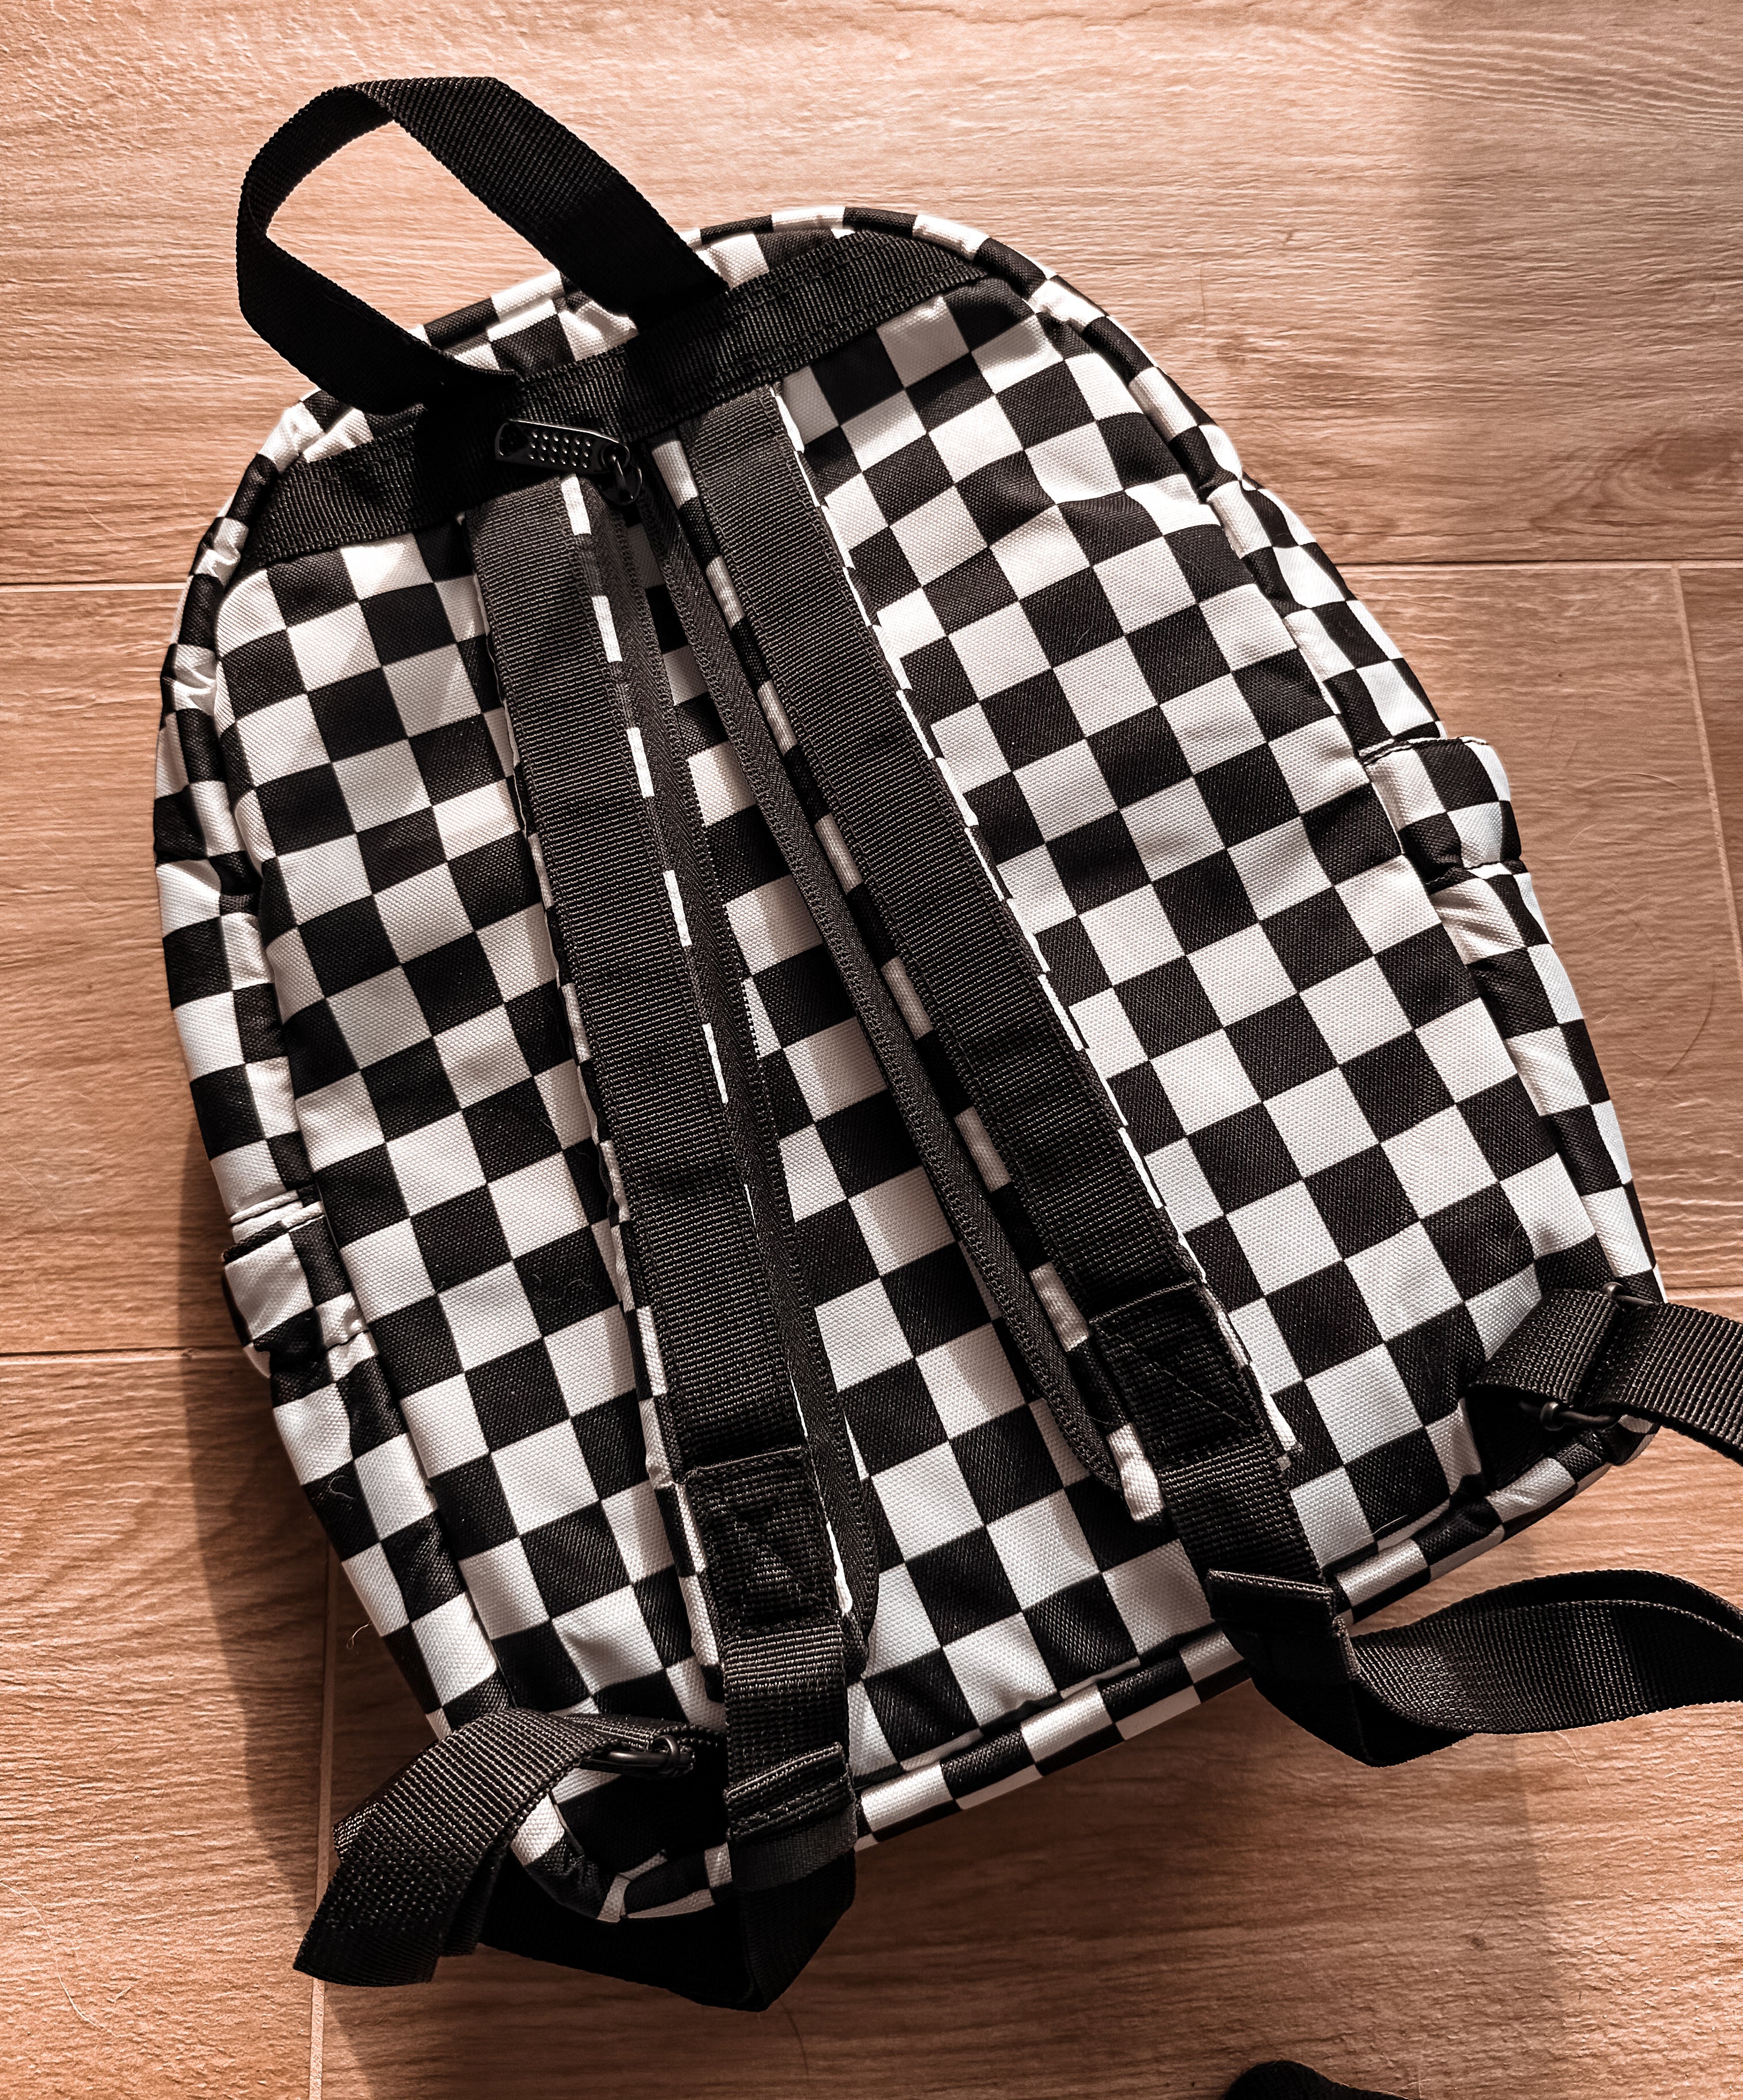 Checkered Basic Backpack